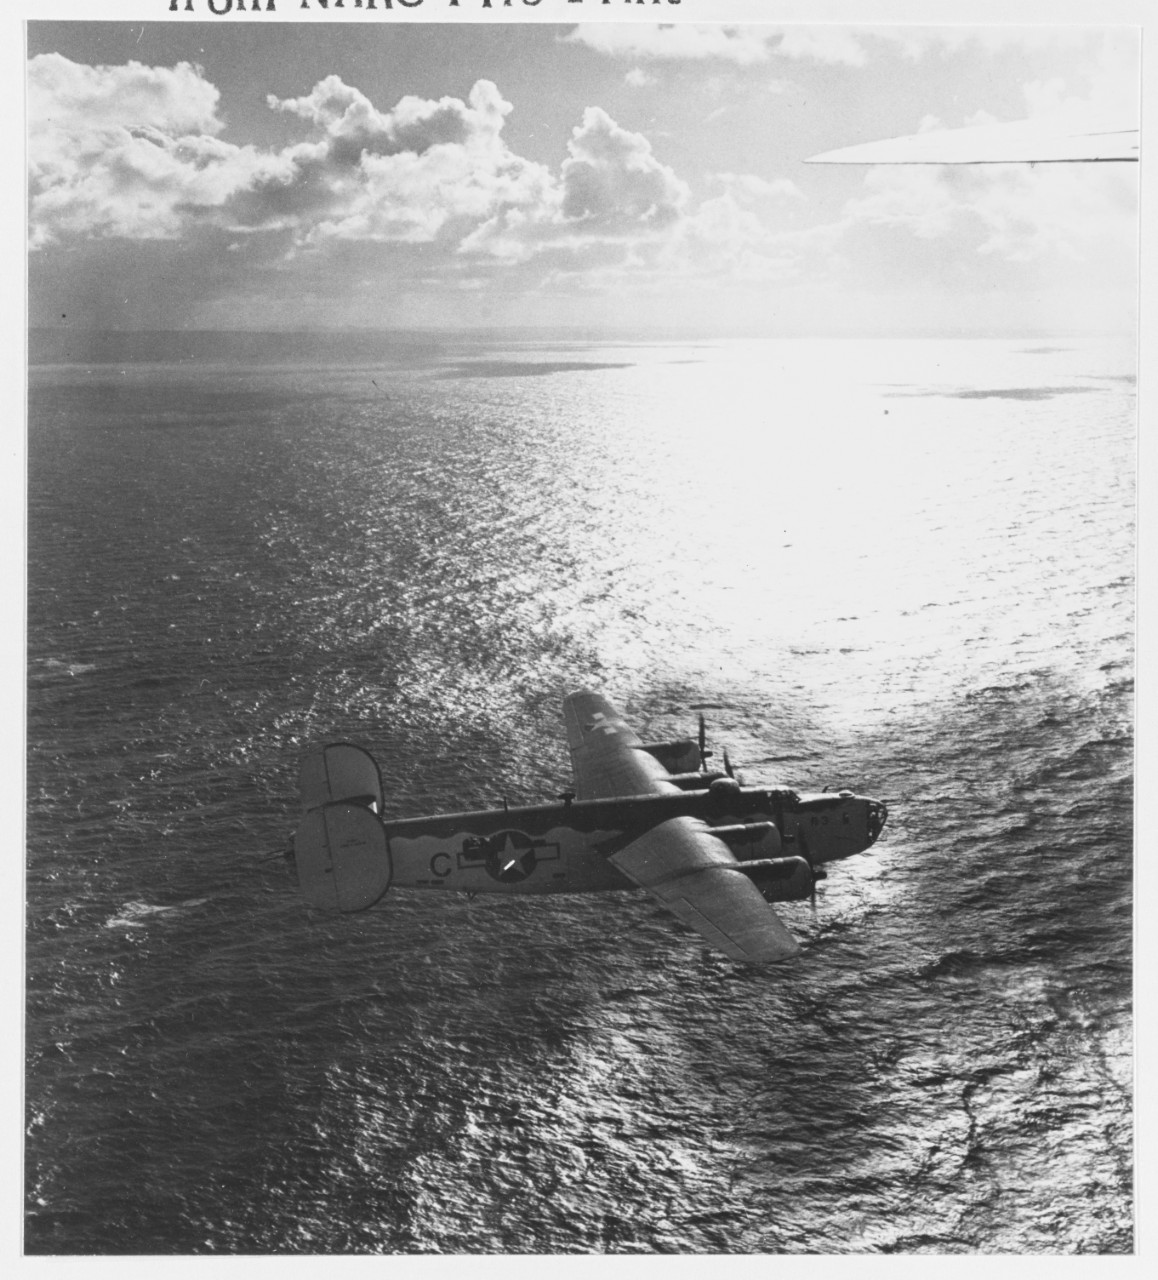 Consolidated PB4Y-1 "Liberator" patrol bomber